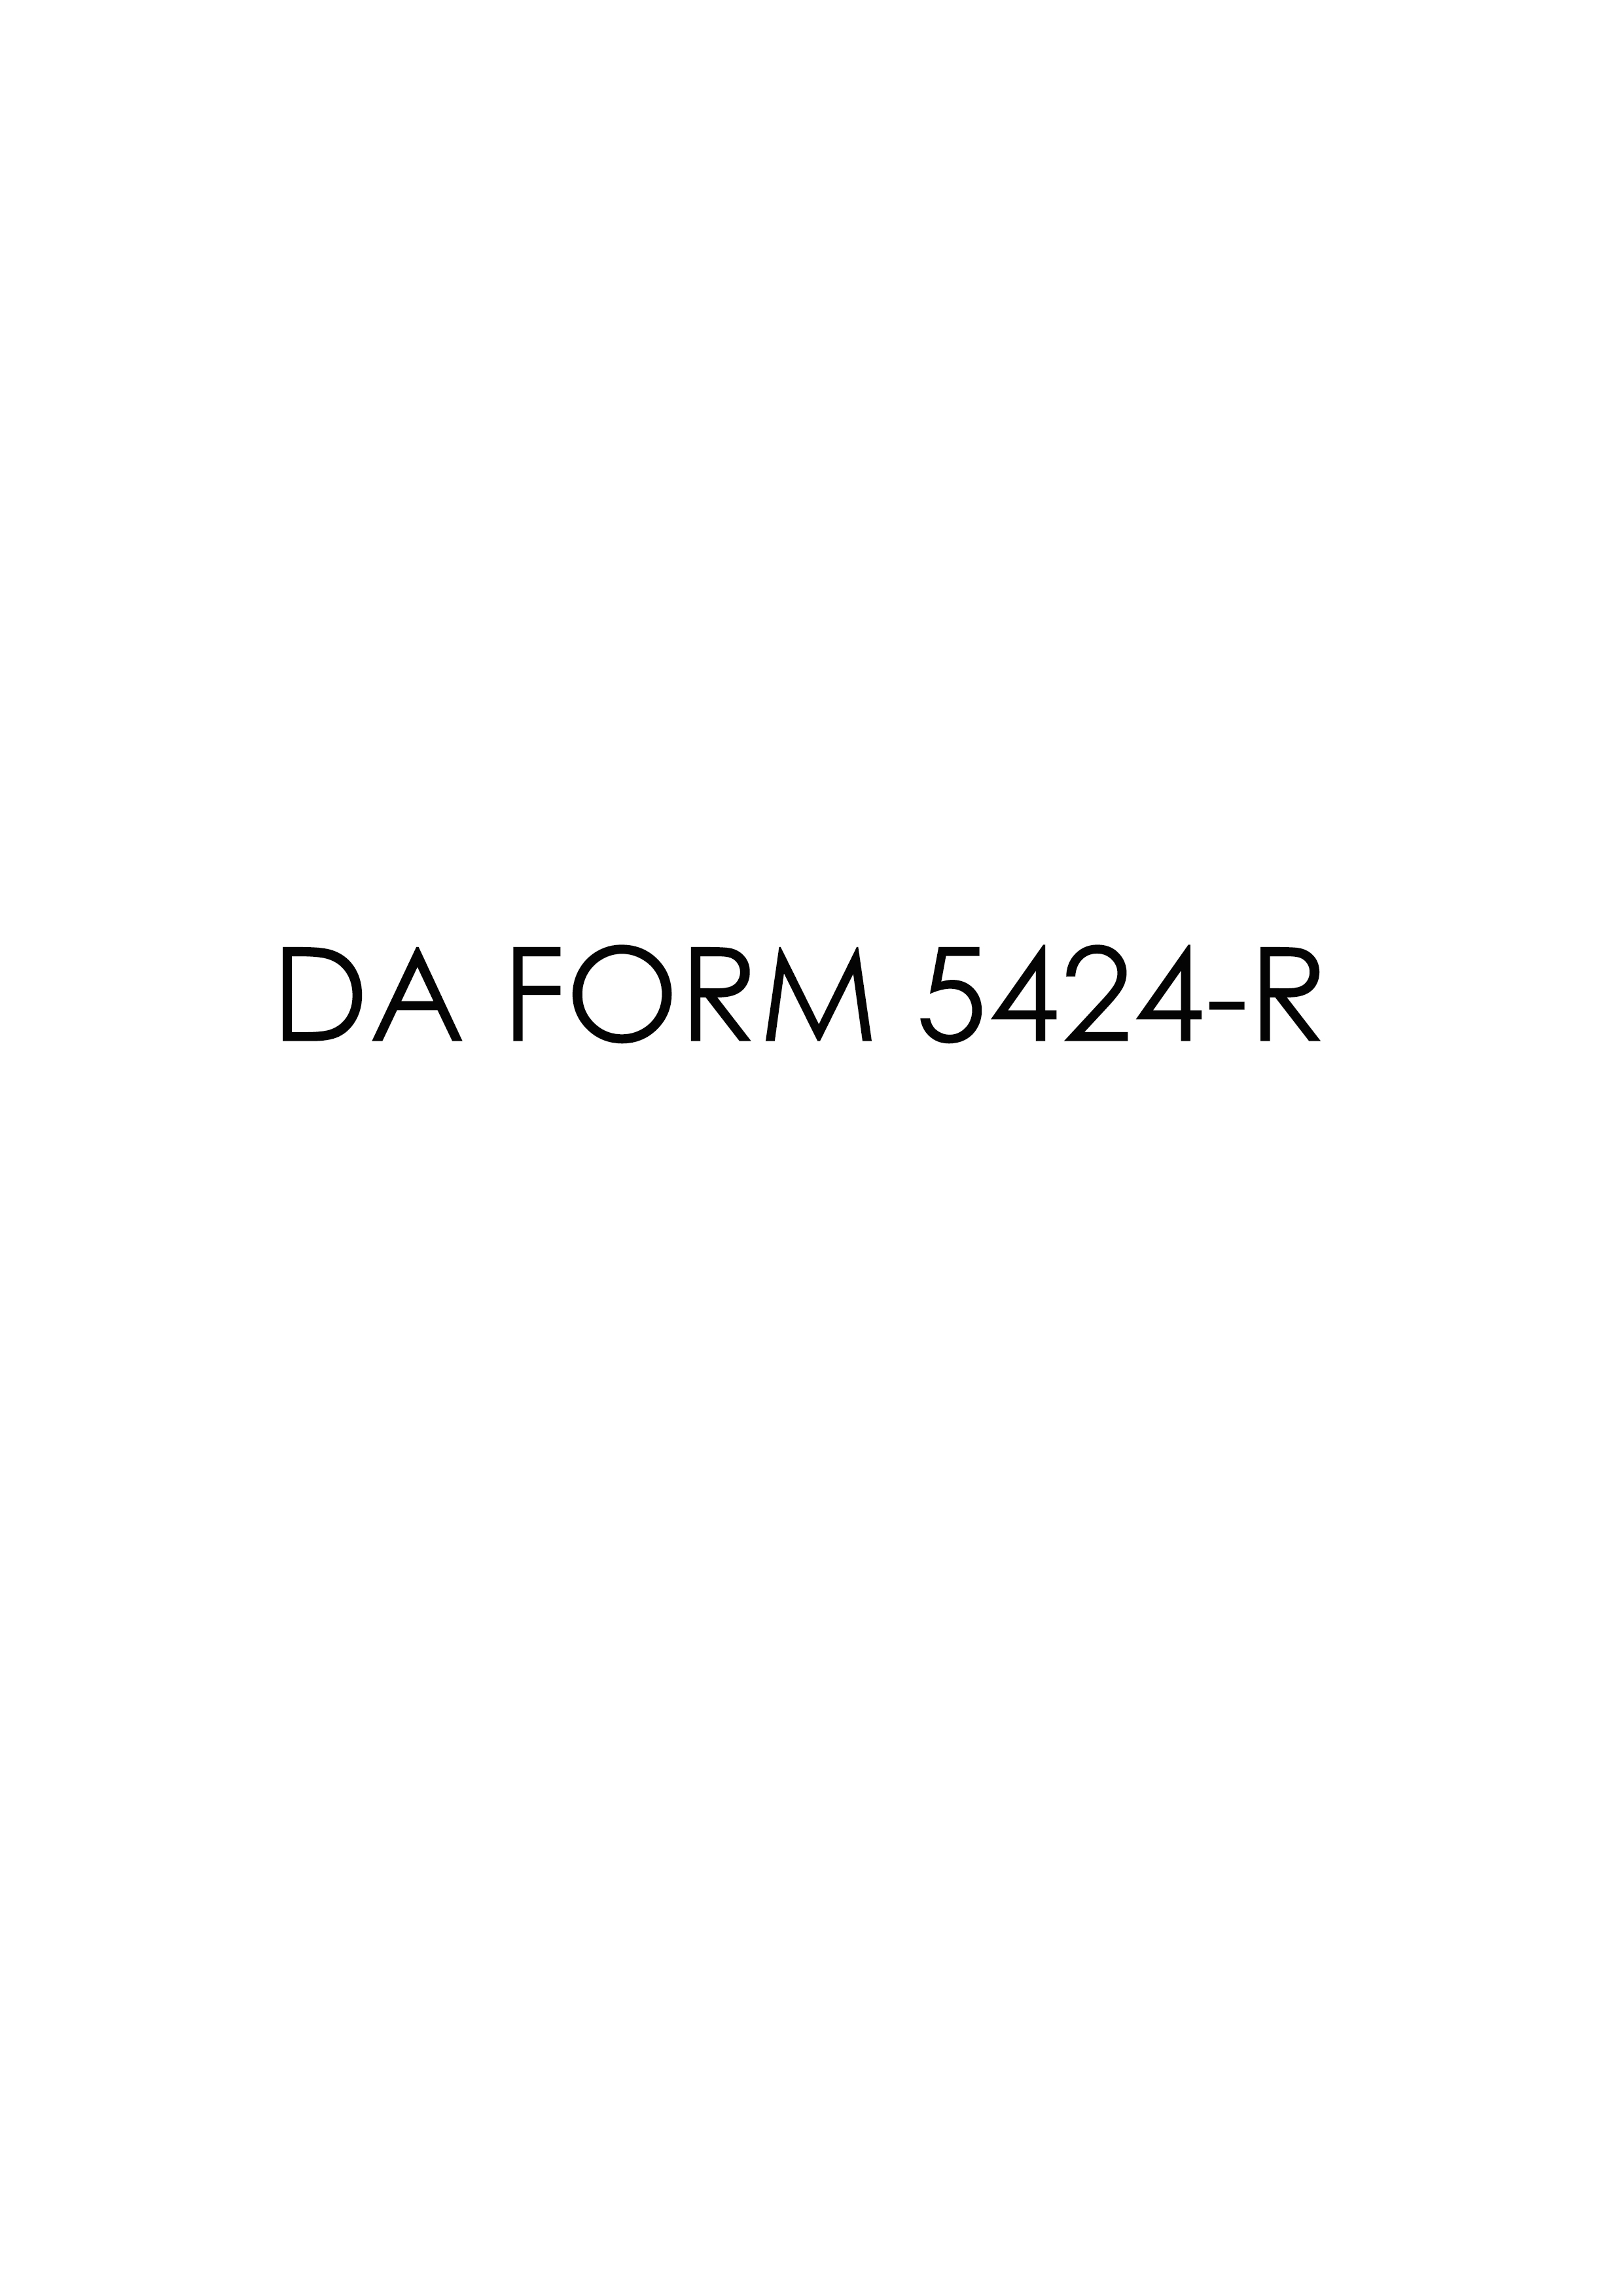 da Form 5424-R fillable